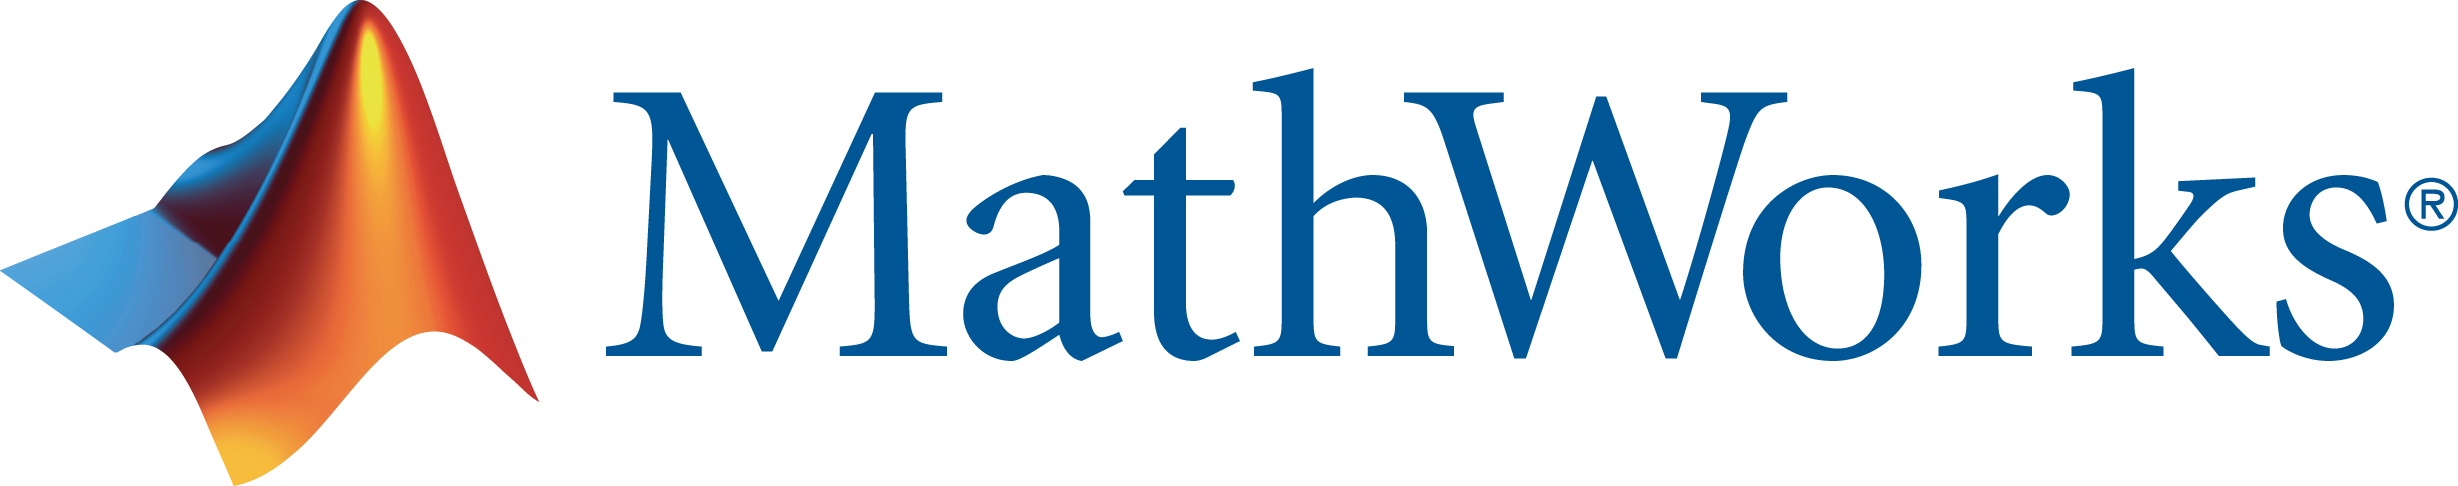 Logo mathworks.jpg